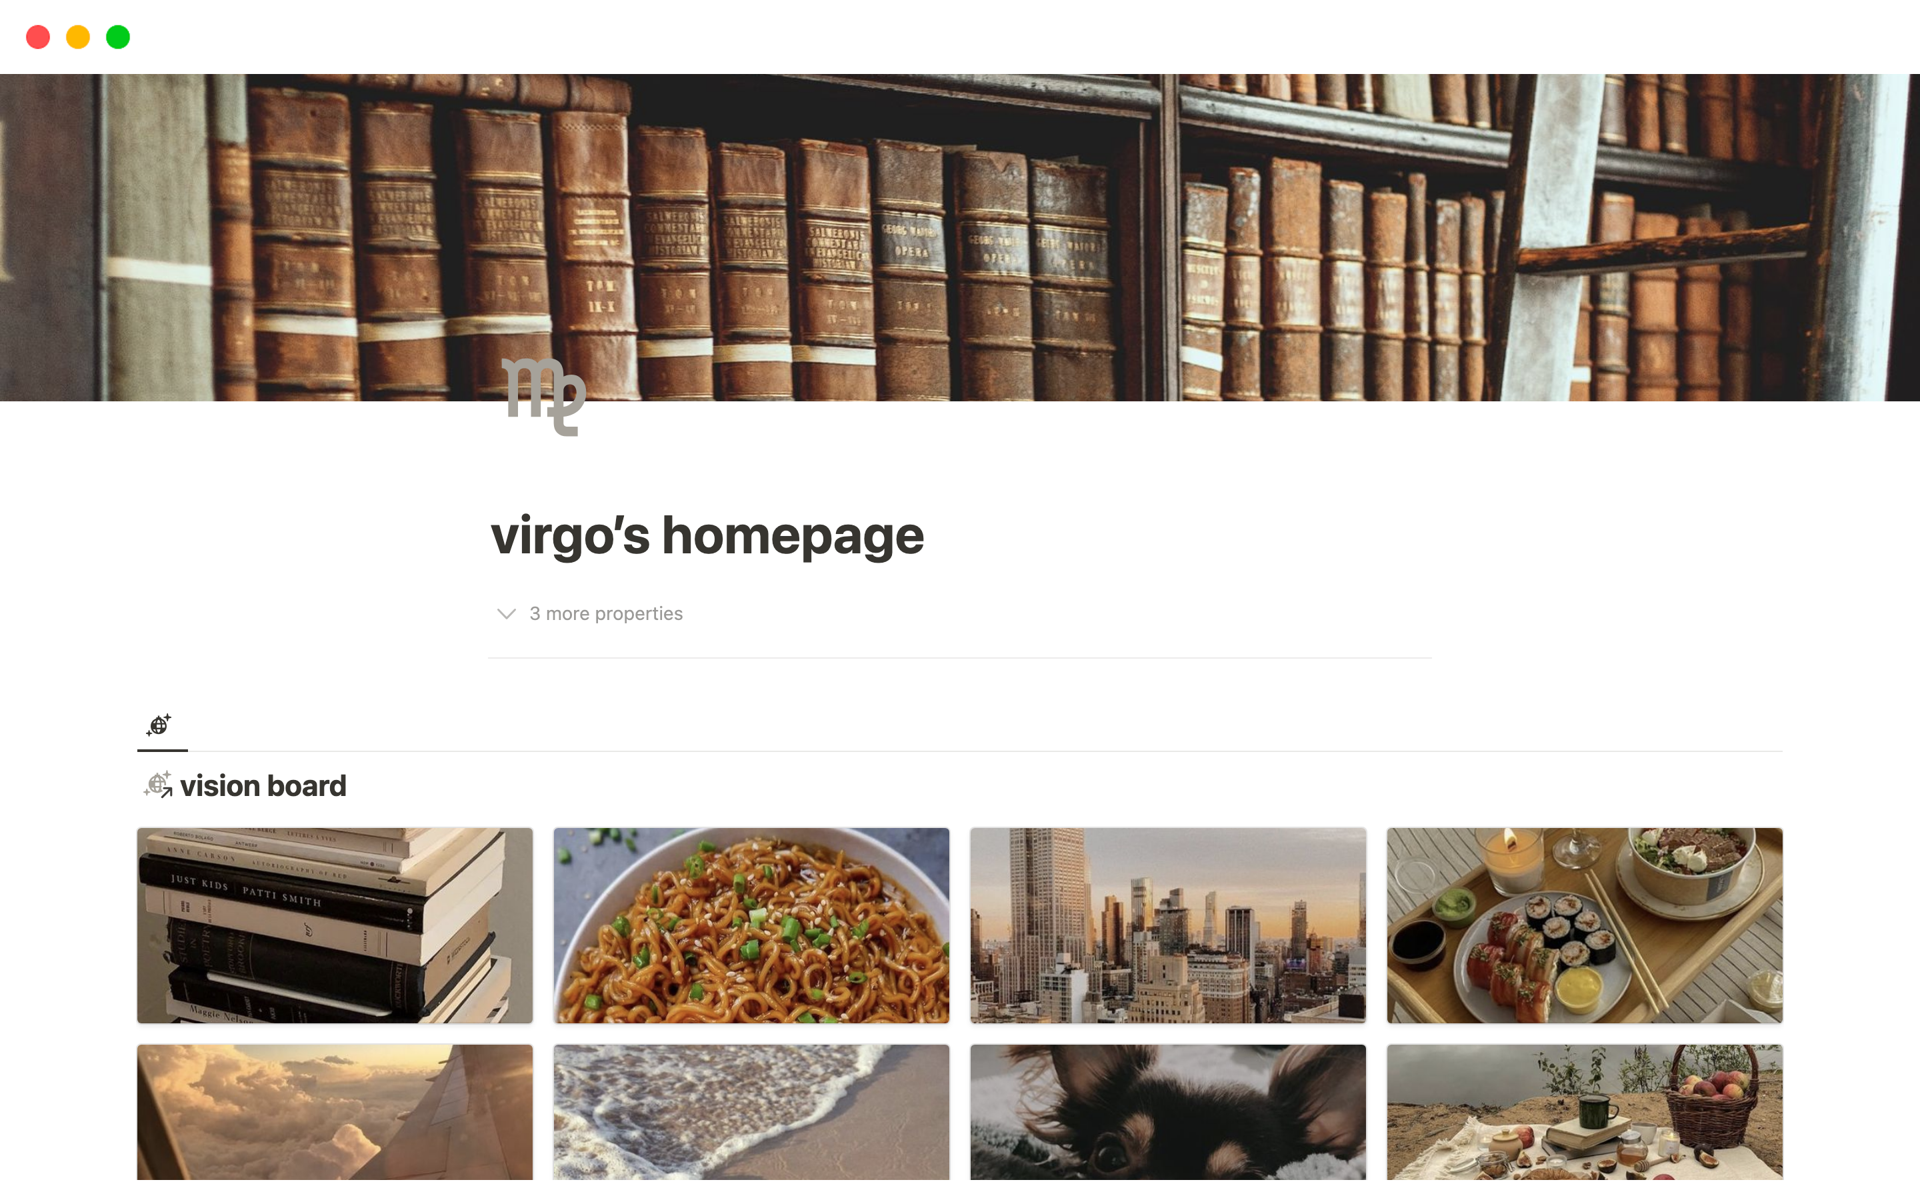 Aperçu du modèle de virgo’s homepage